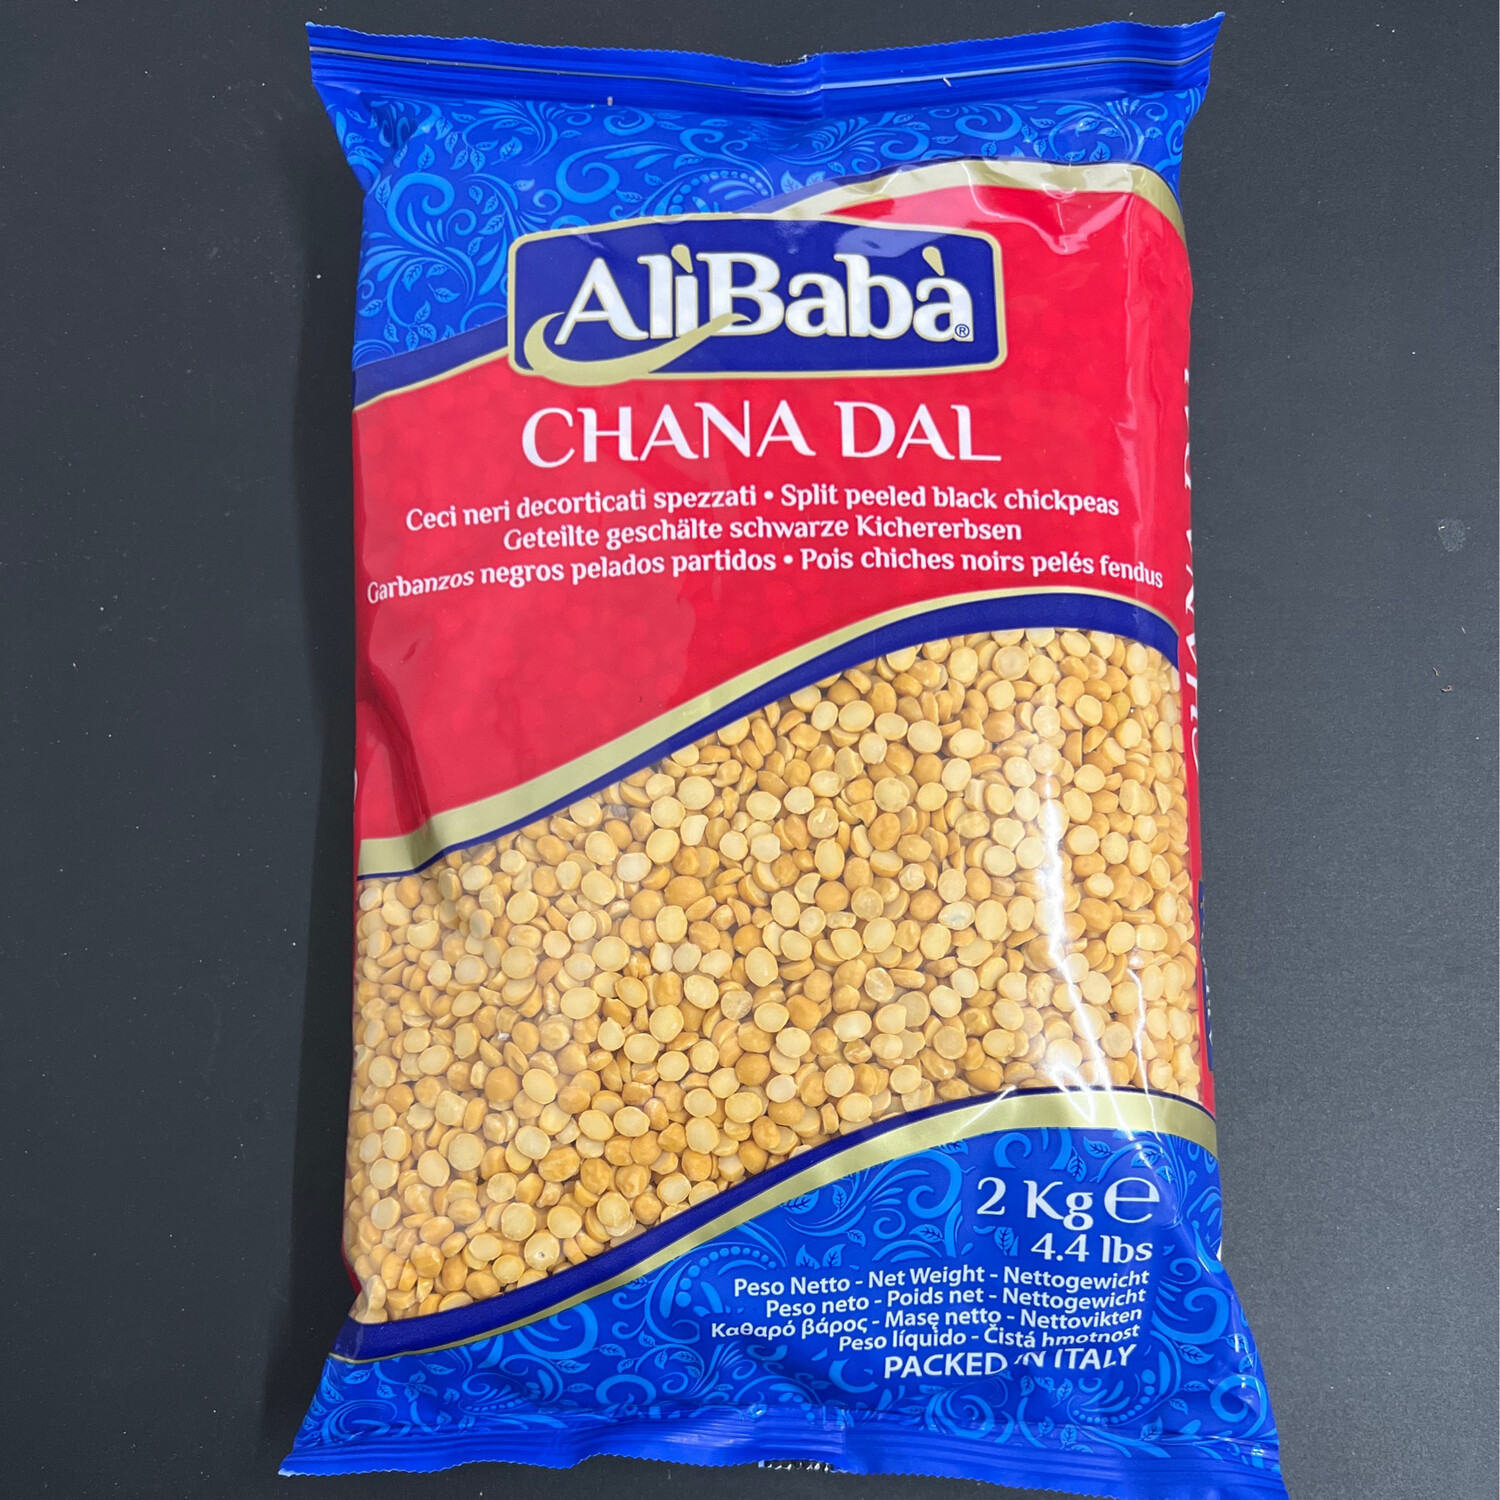 Alibaba Chana Dal 2kg